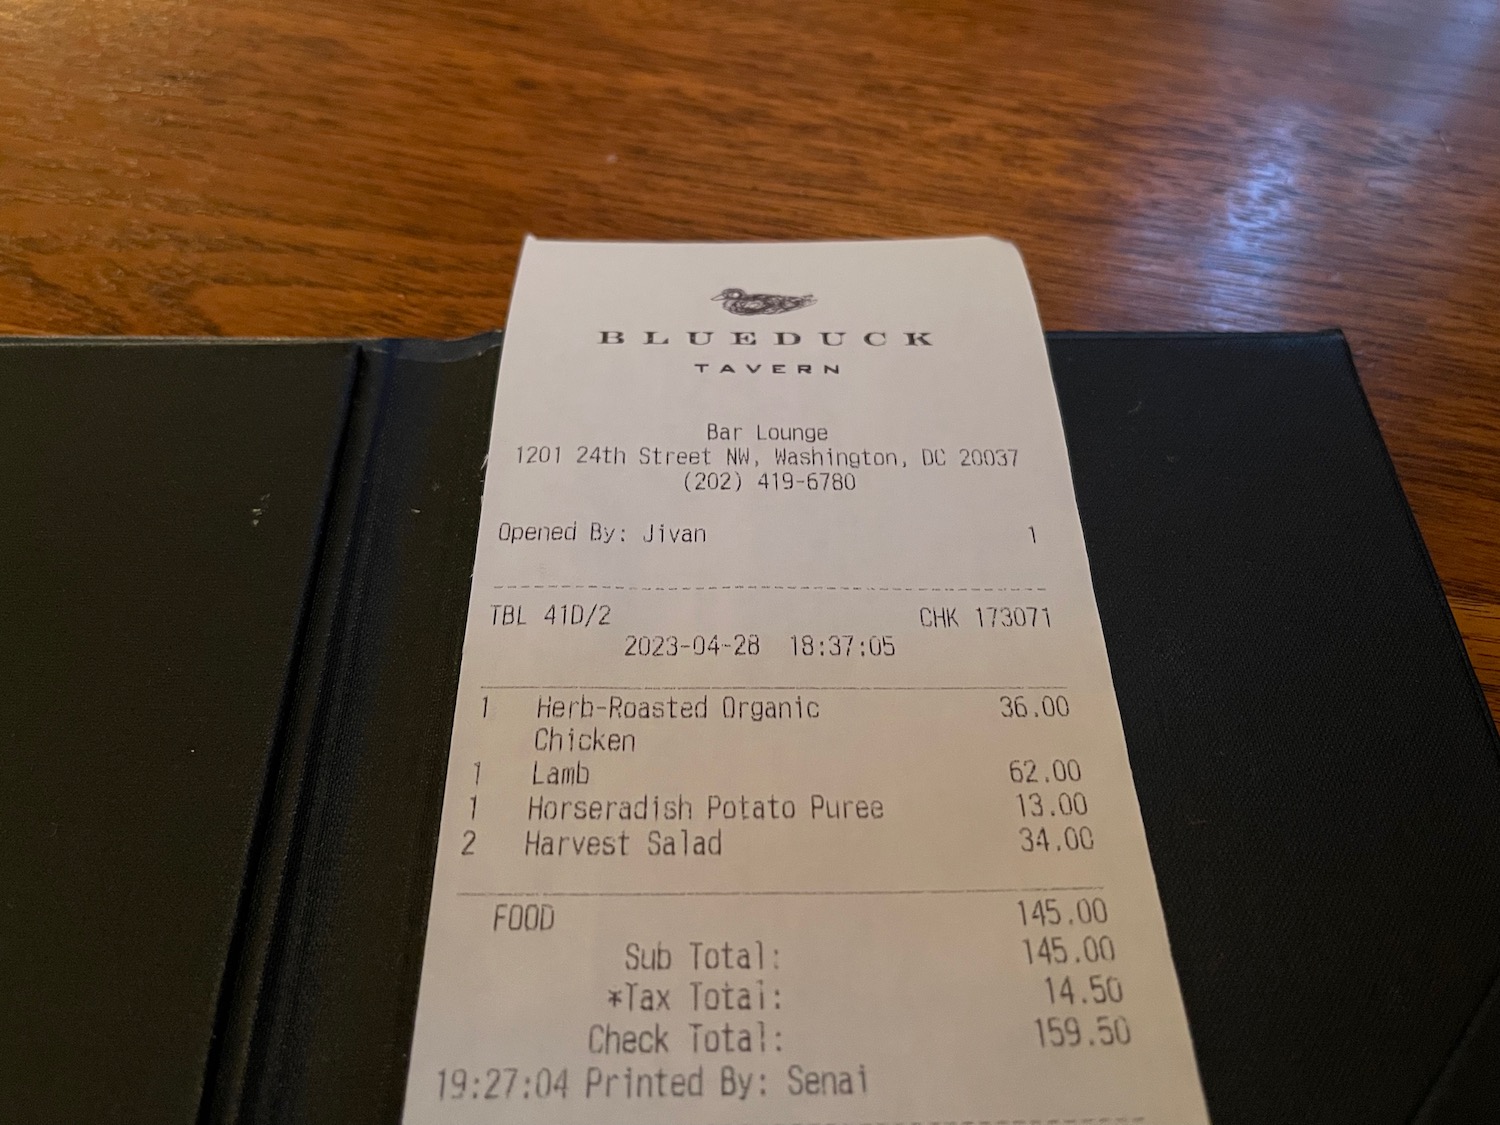 a receipt on a restaurant cover